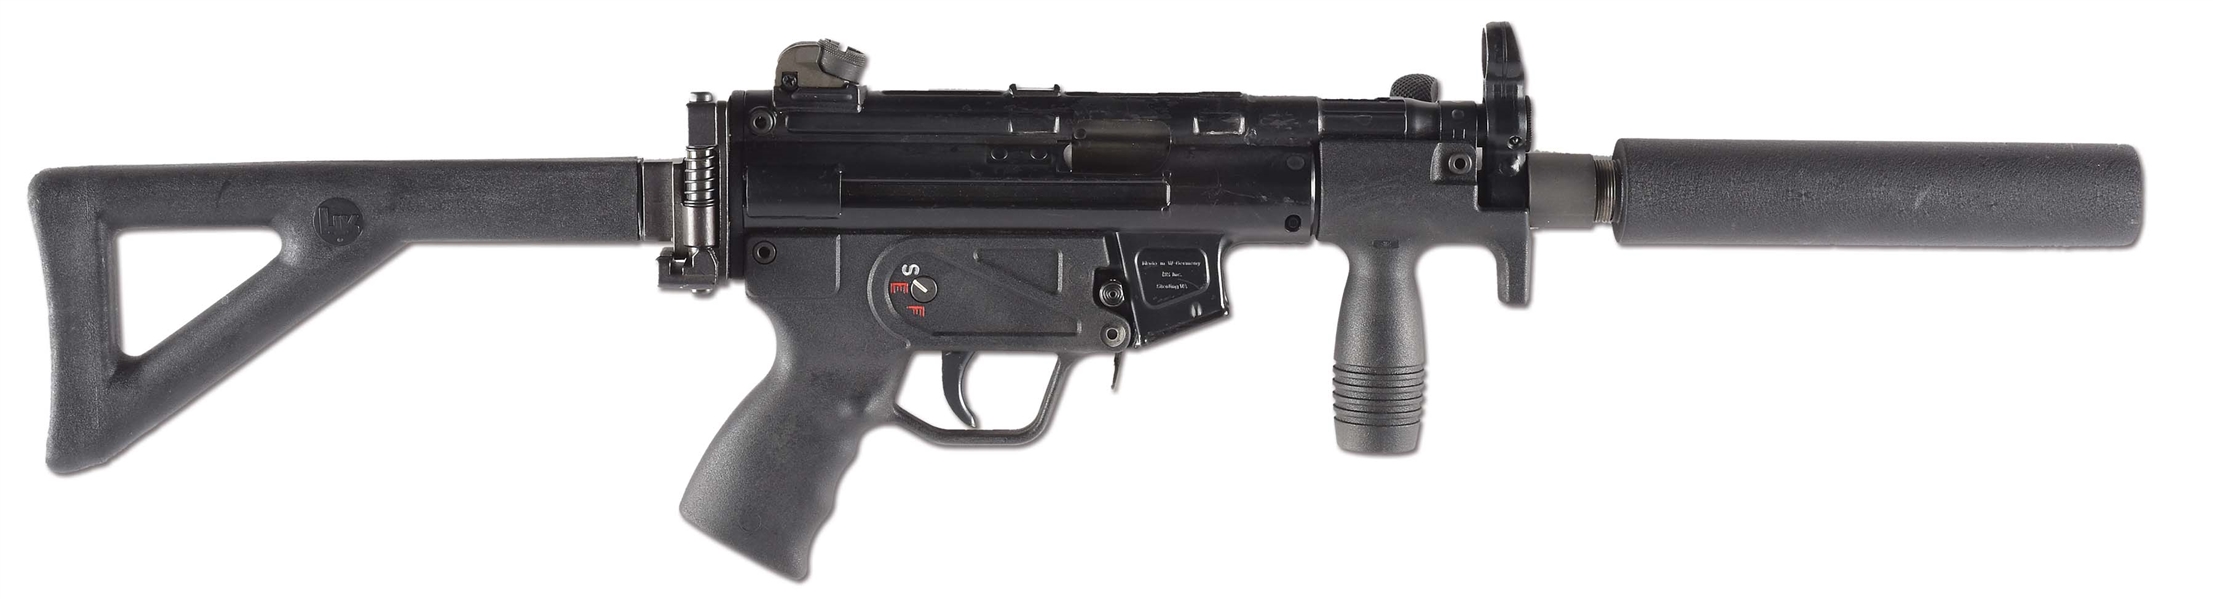 (N) FANTASTIC HK MP5K MACHINE GUN (FULLY TRANSFERABLE) WITH AWC SUPPRESSOR.